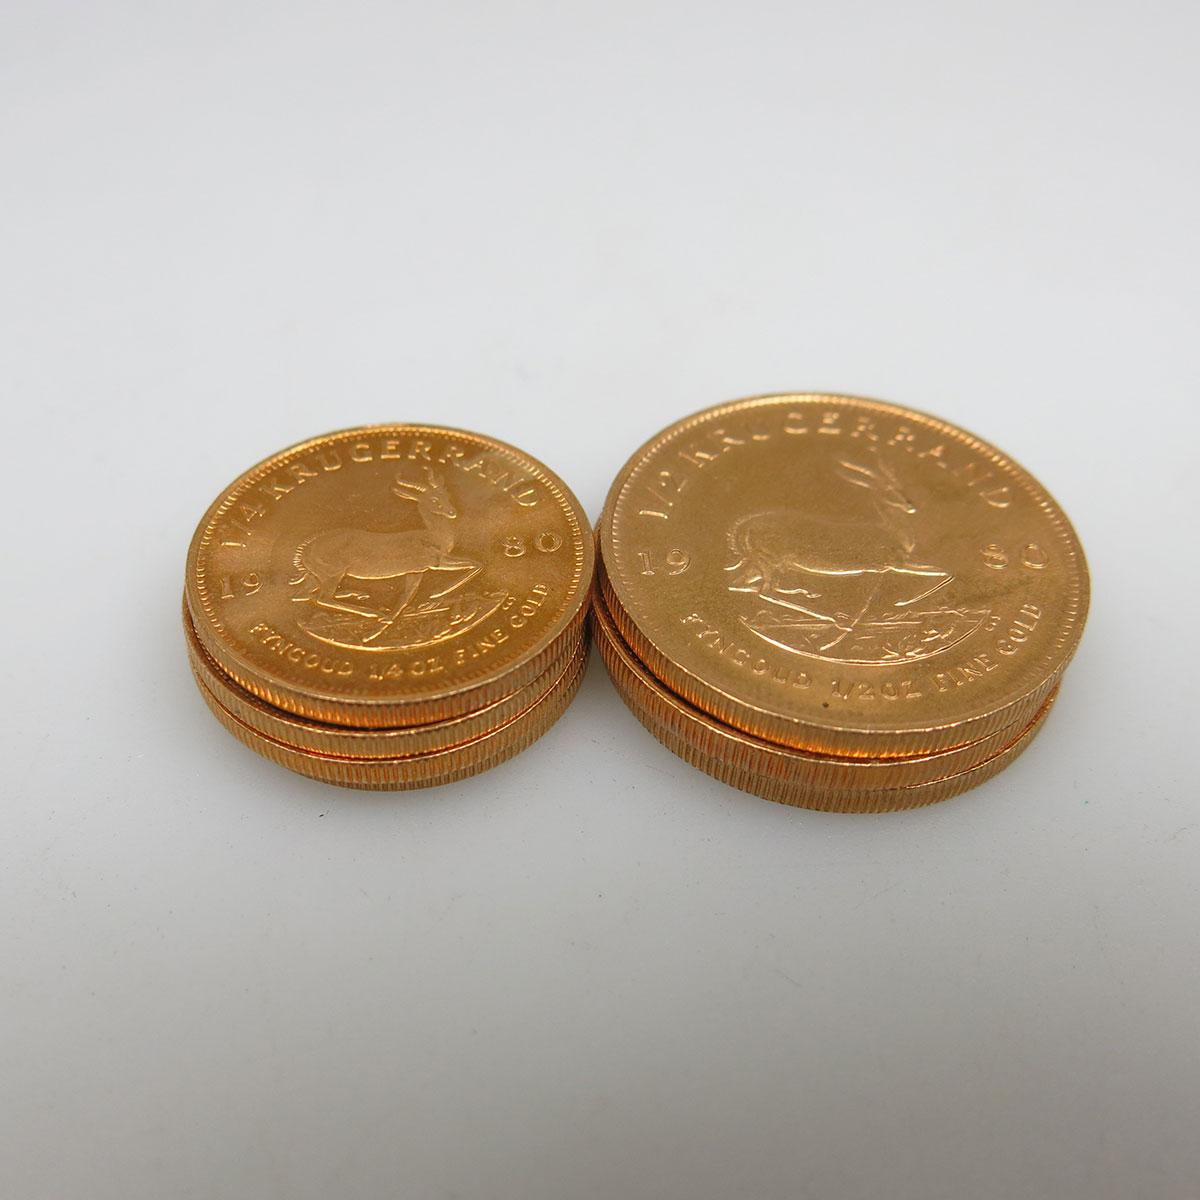 3 Half And 4 Quarter Krugerrand Gold Coins